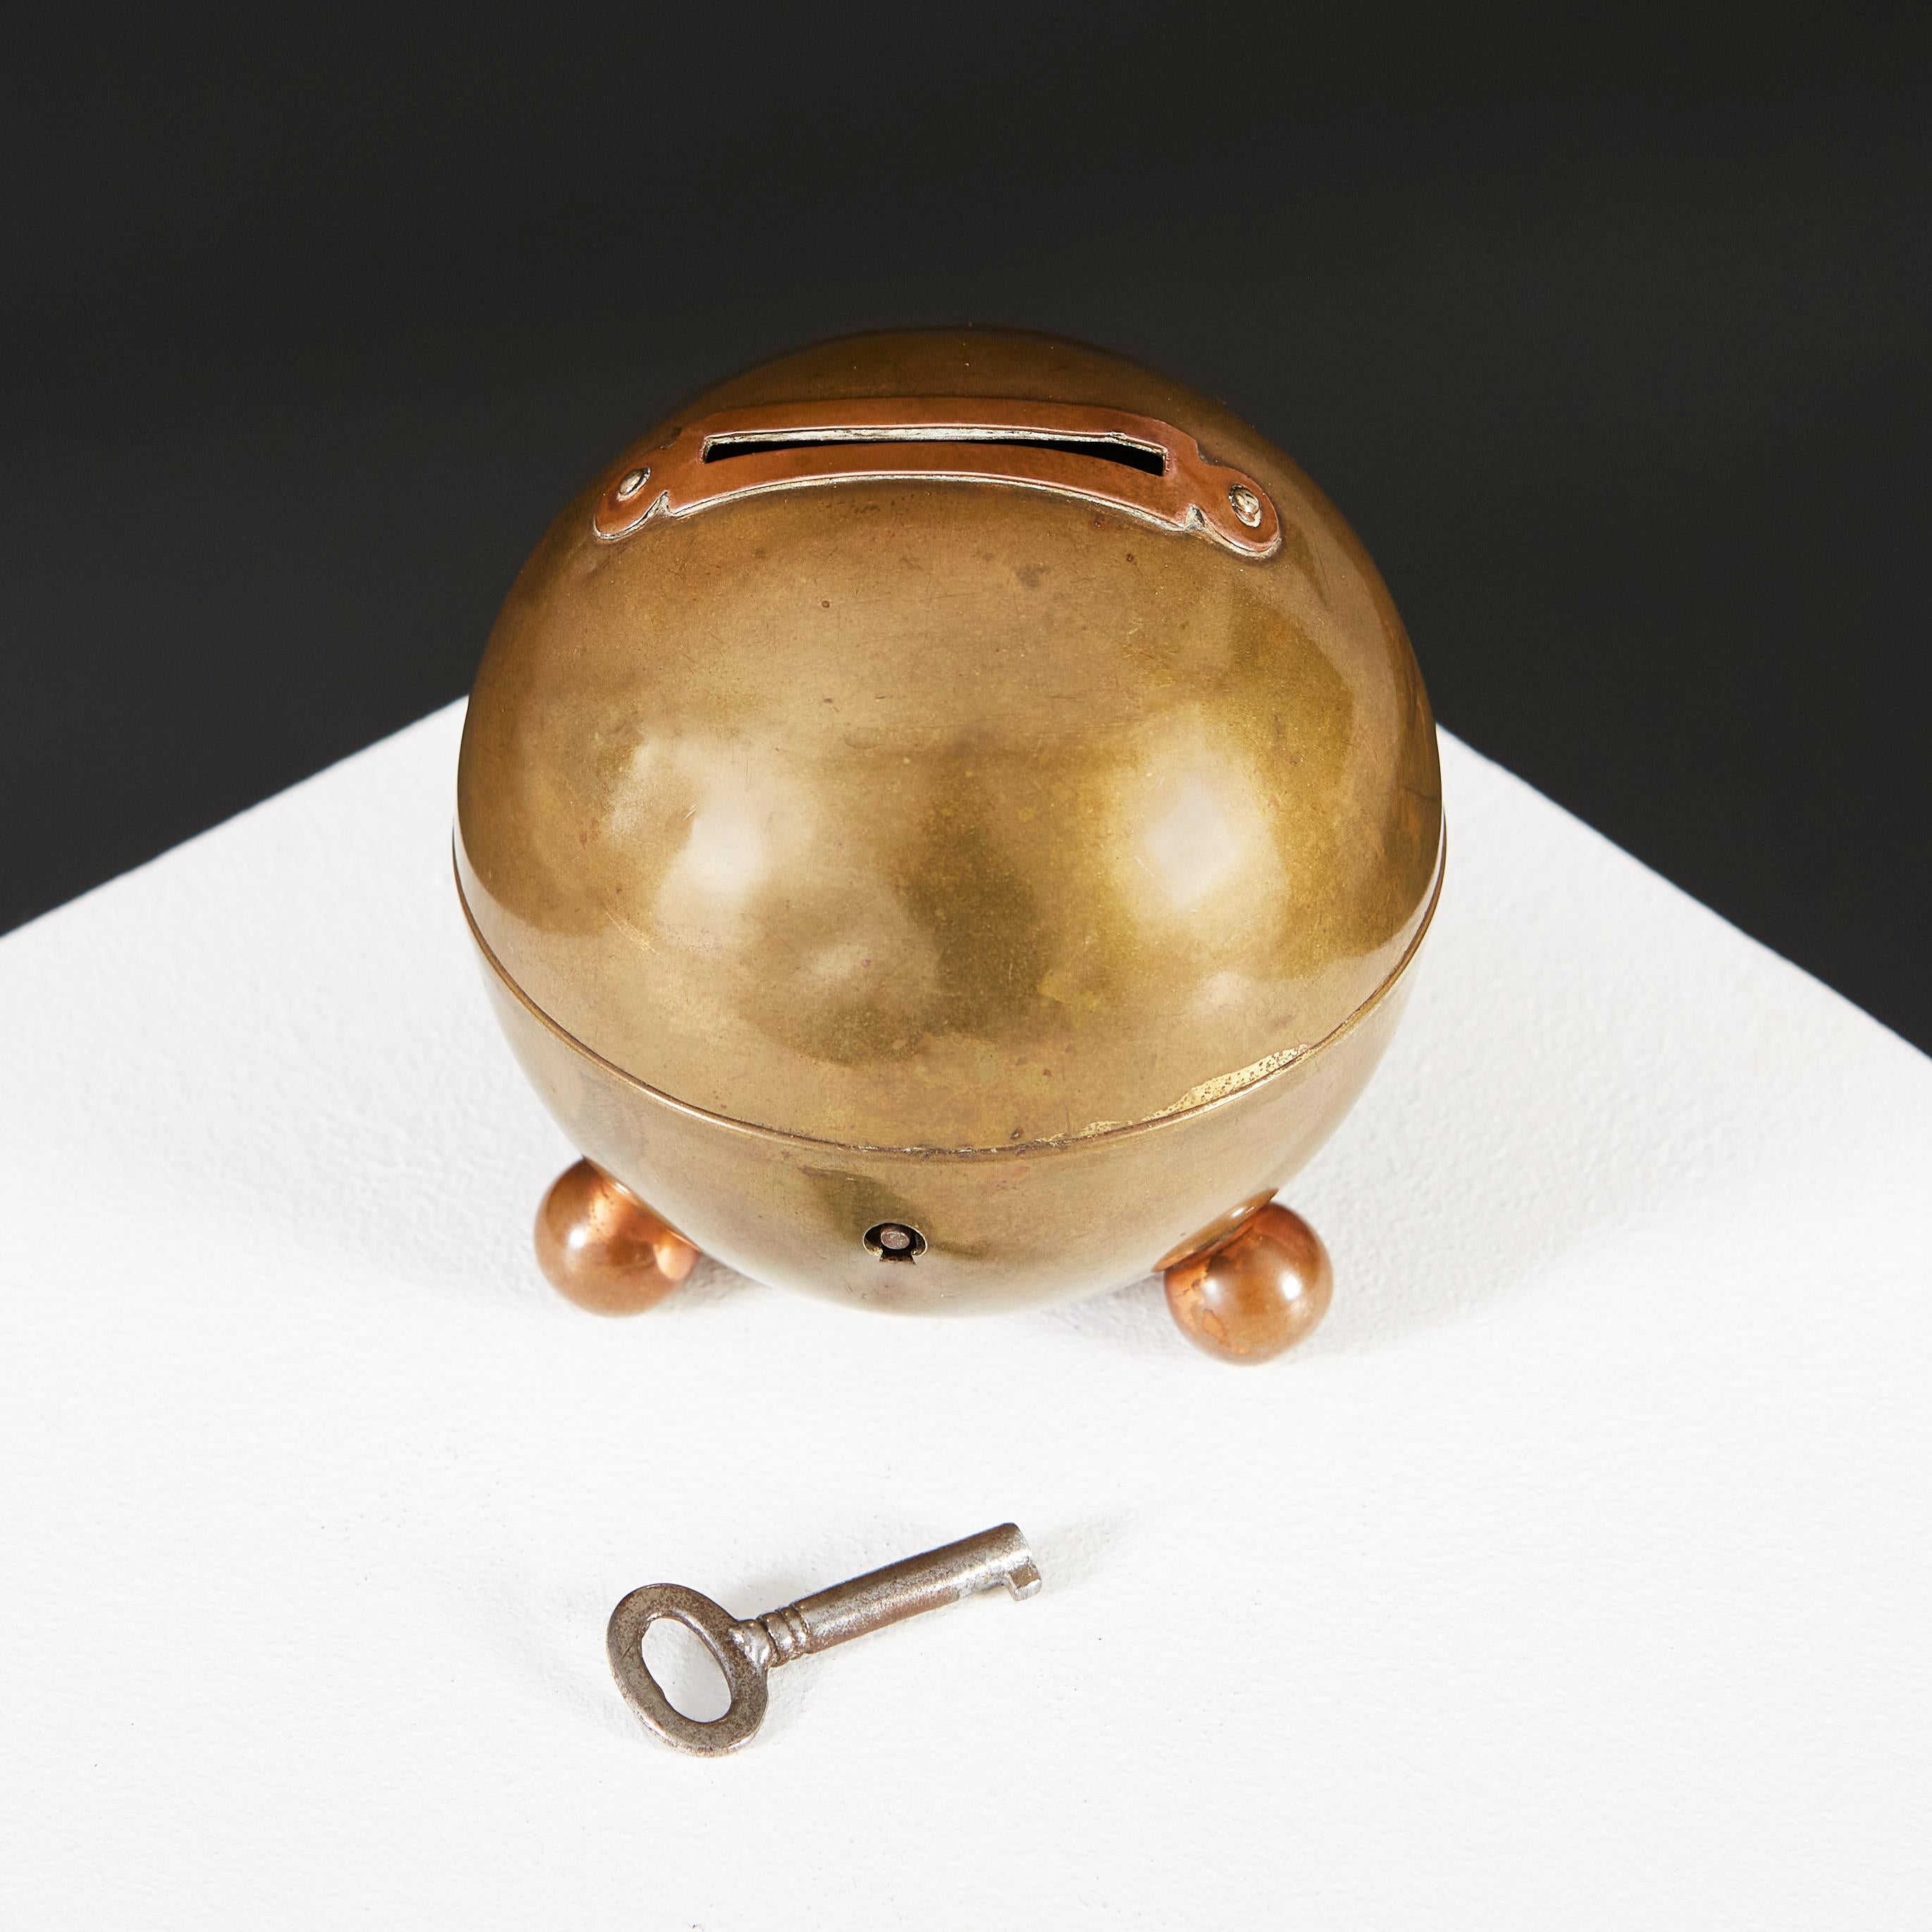 Bauhaus Brass and Copper Moneybox Attributed to Marianne Brandt